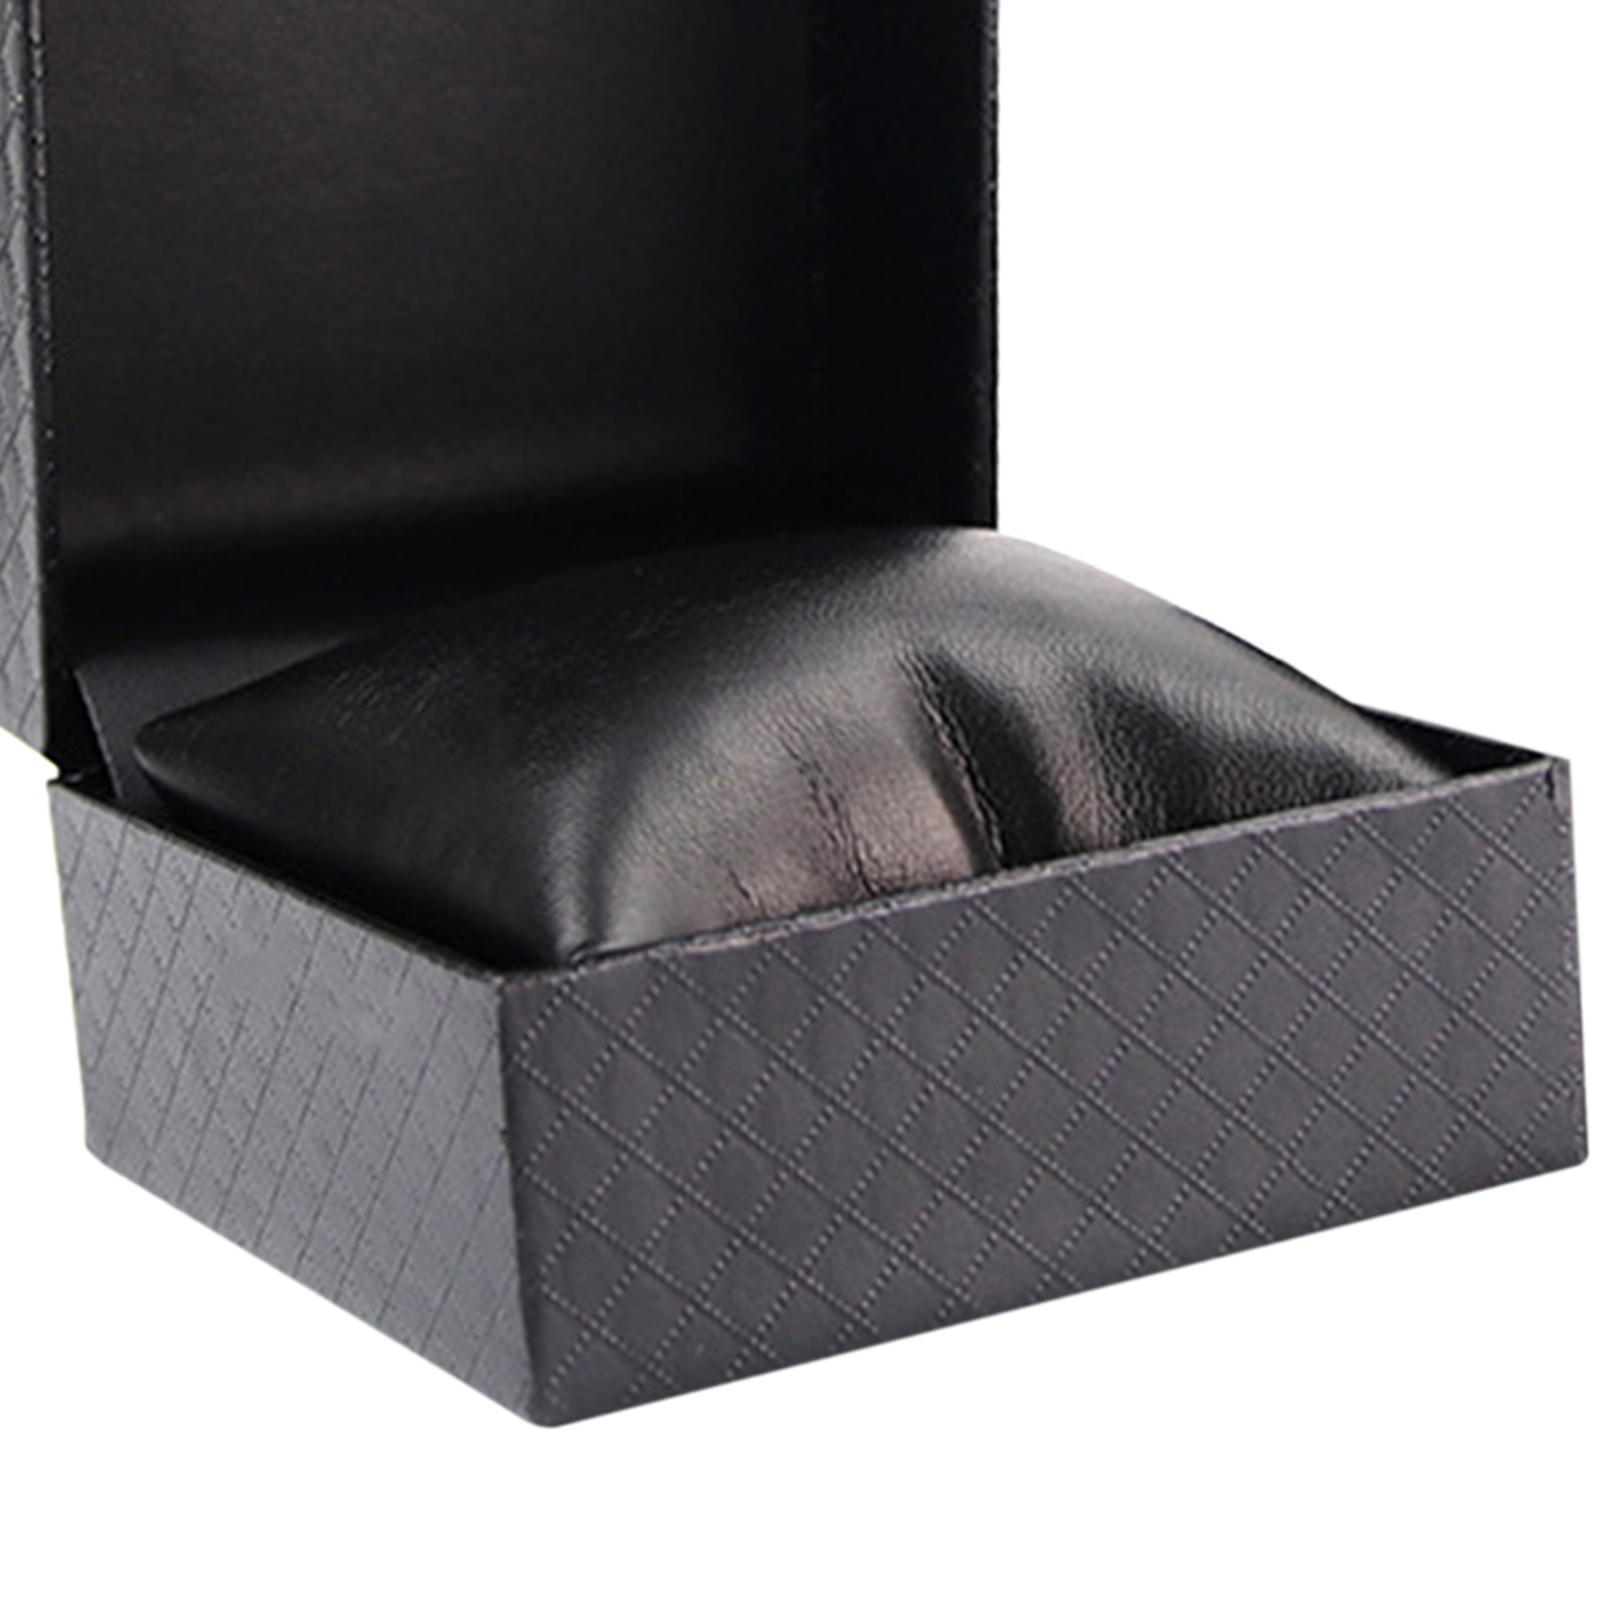 PU Leather Watch Case Display Holder Organizer Black Jewelry Box Gift Sturdy